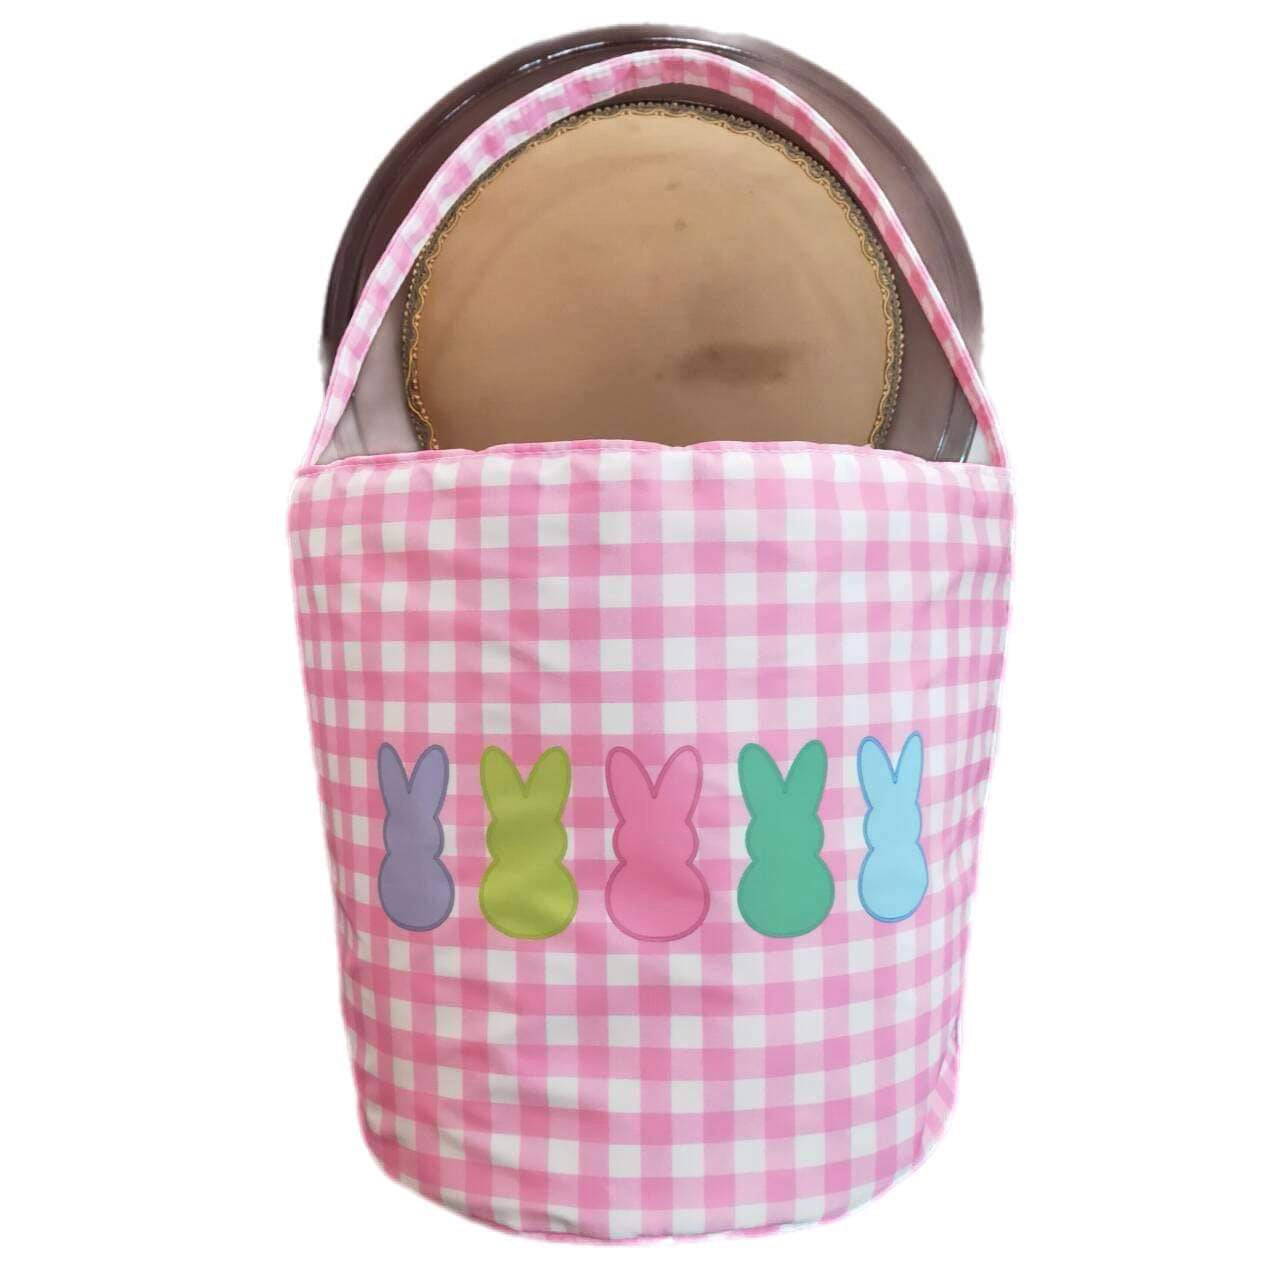 ᴡᴇᴇᴋʟʏ ᴘʀᴇ ᴏʀᴅᴇʀ Easter Pink Checkered Basket with Bunnies